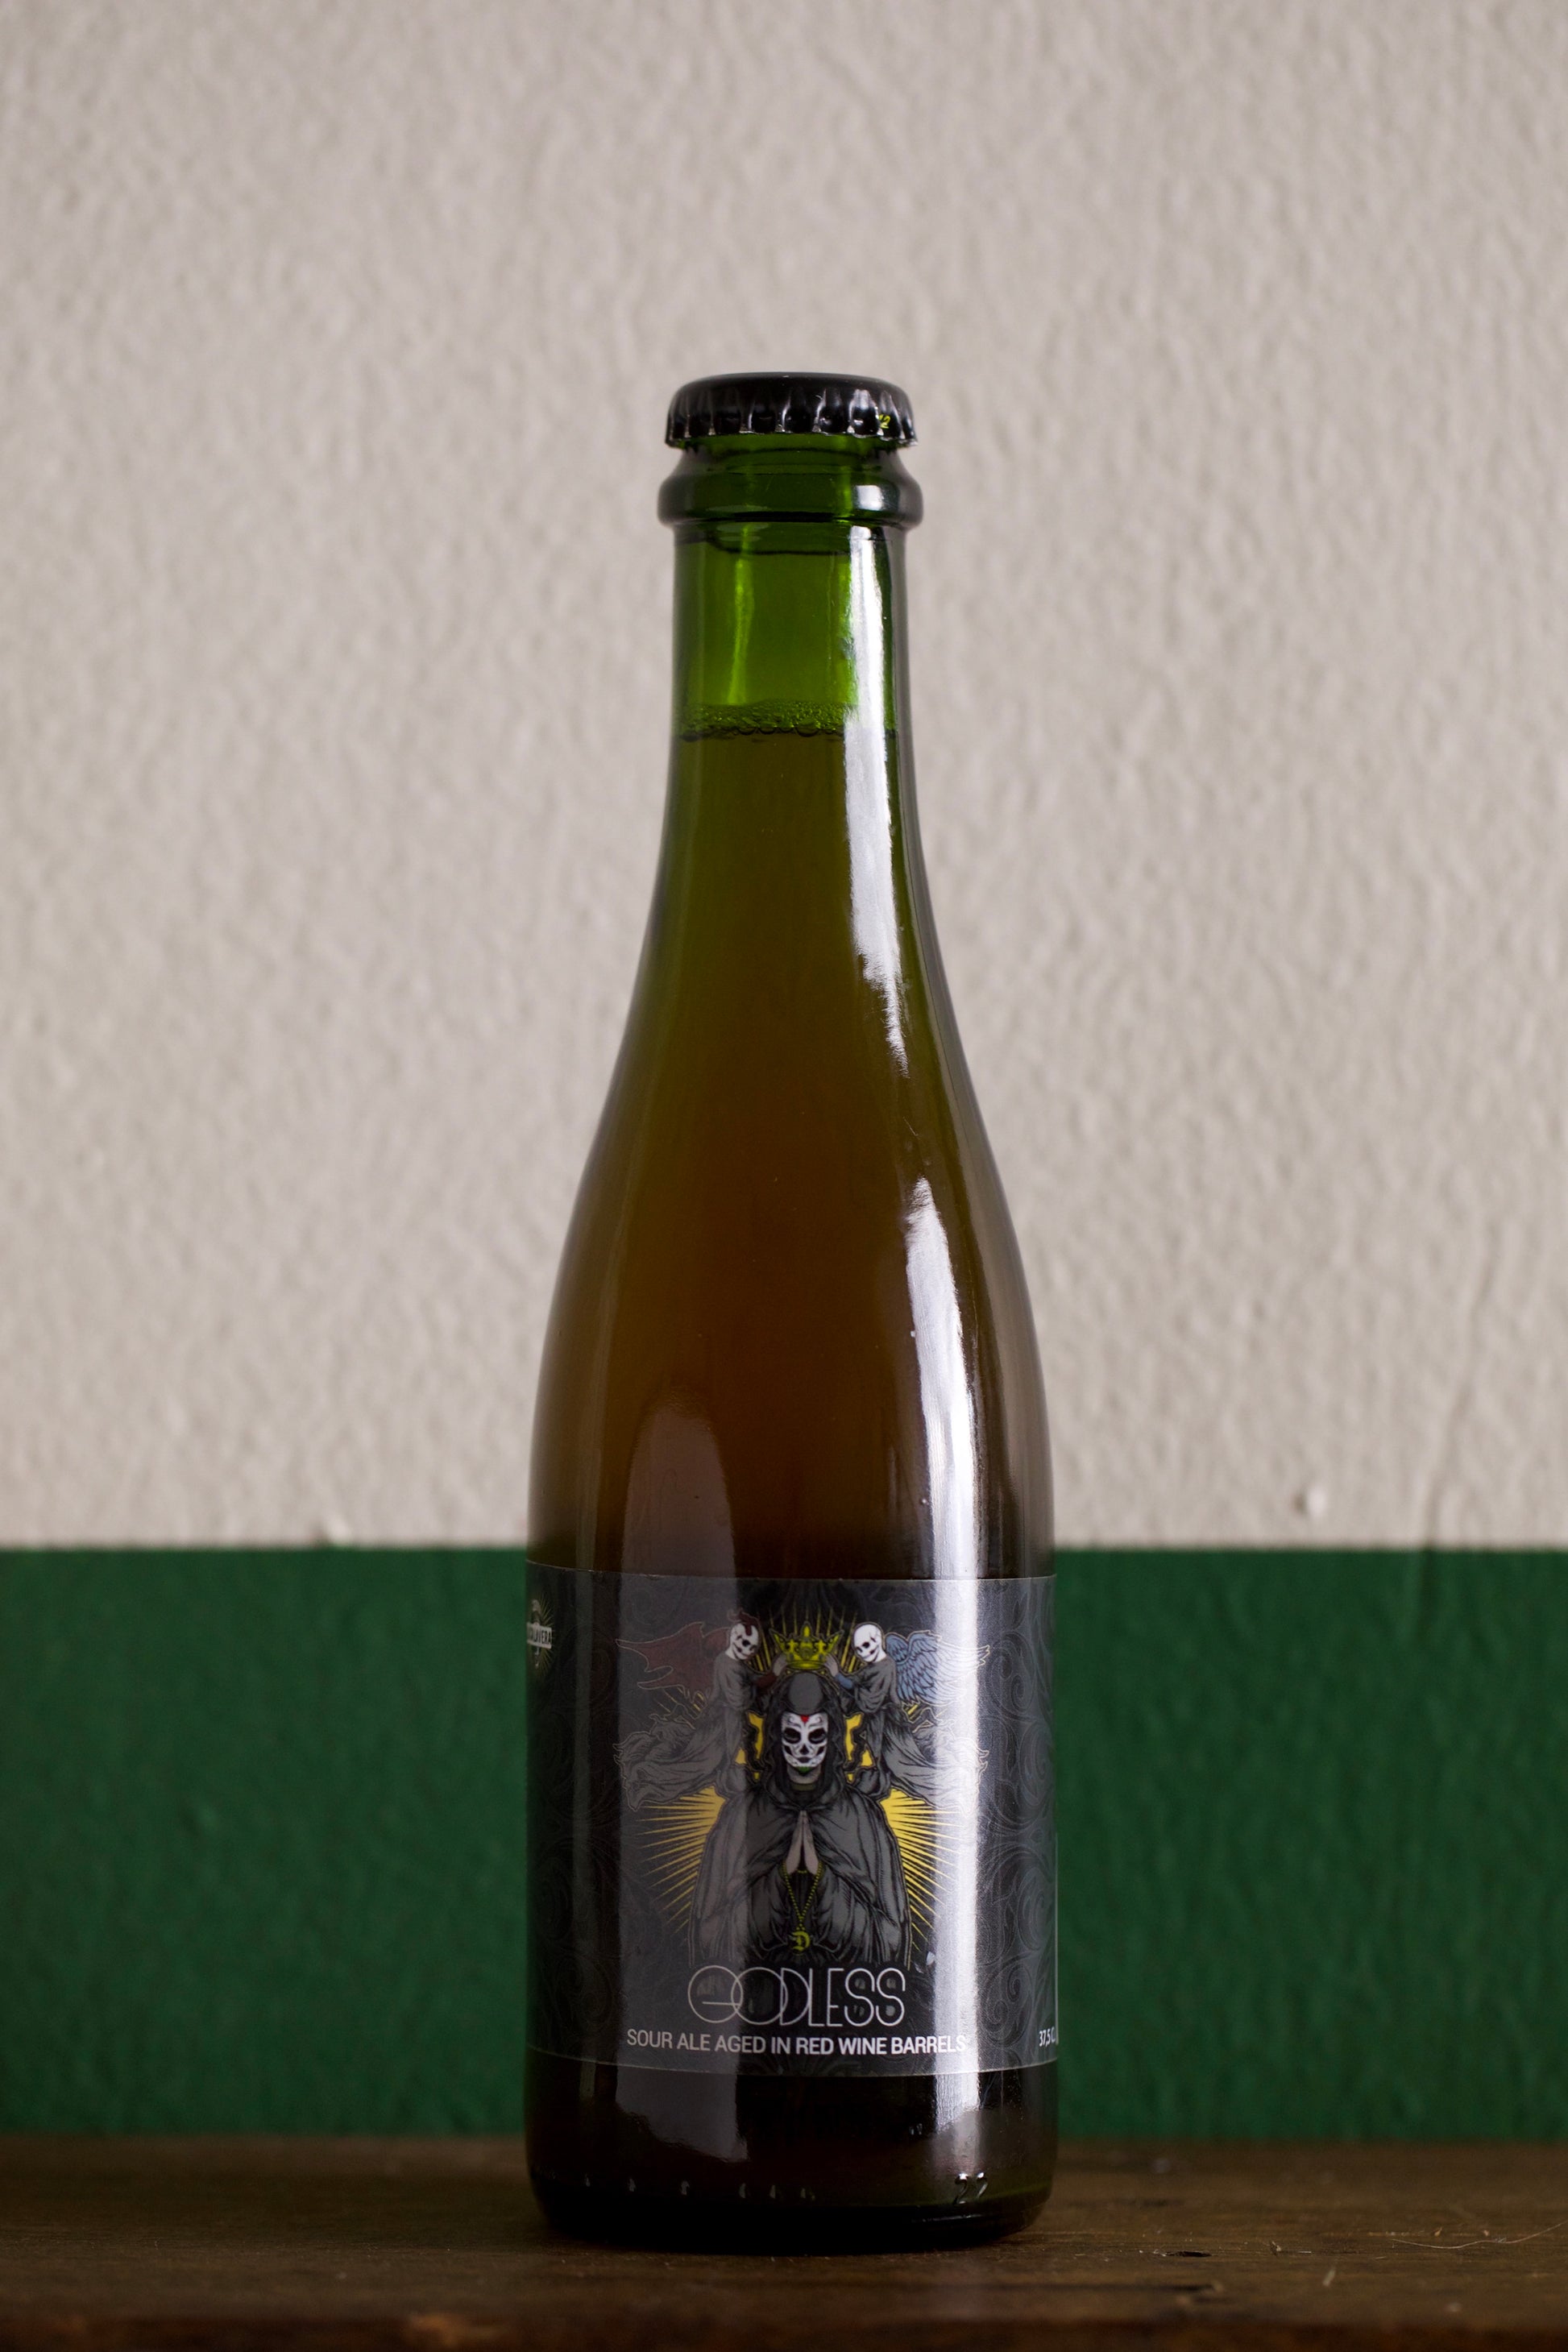 Bottle of La Calavera 'Godless' 375ml